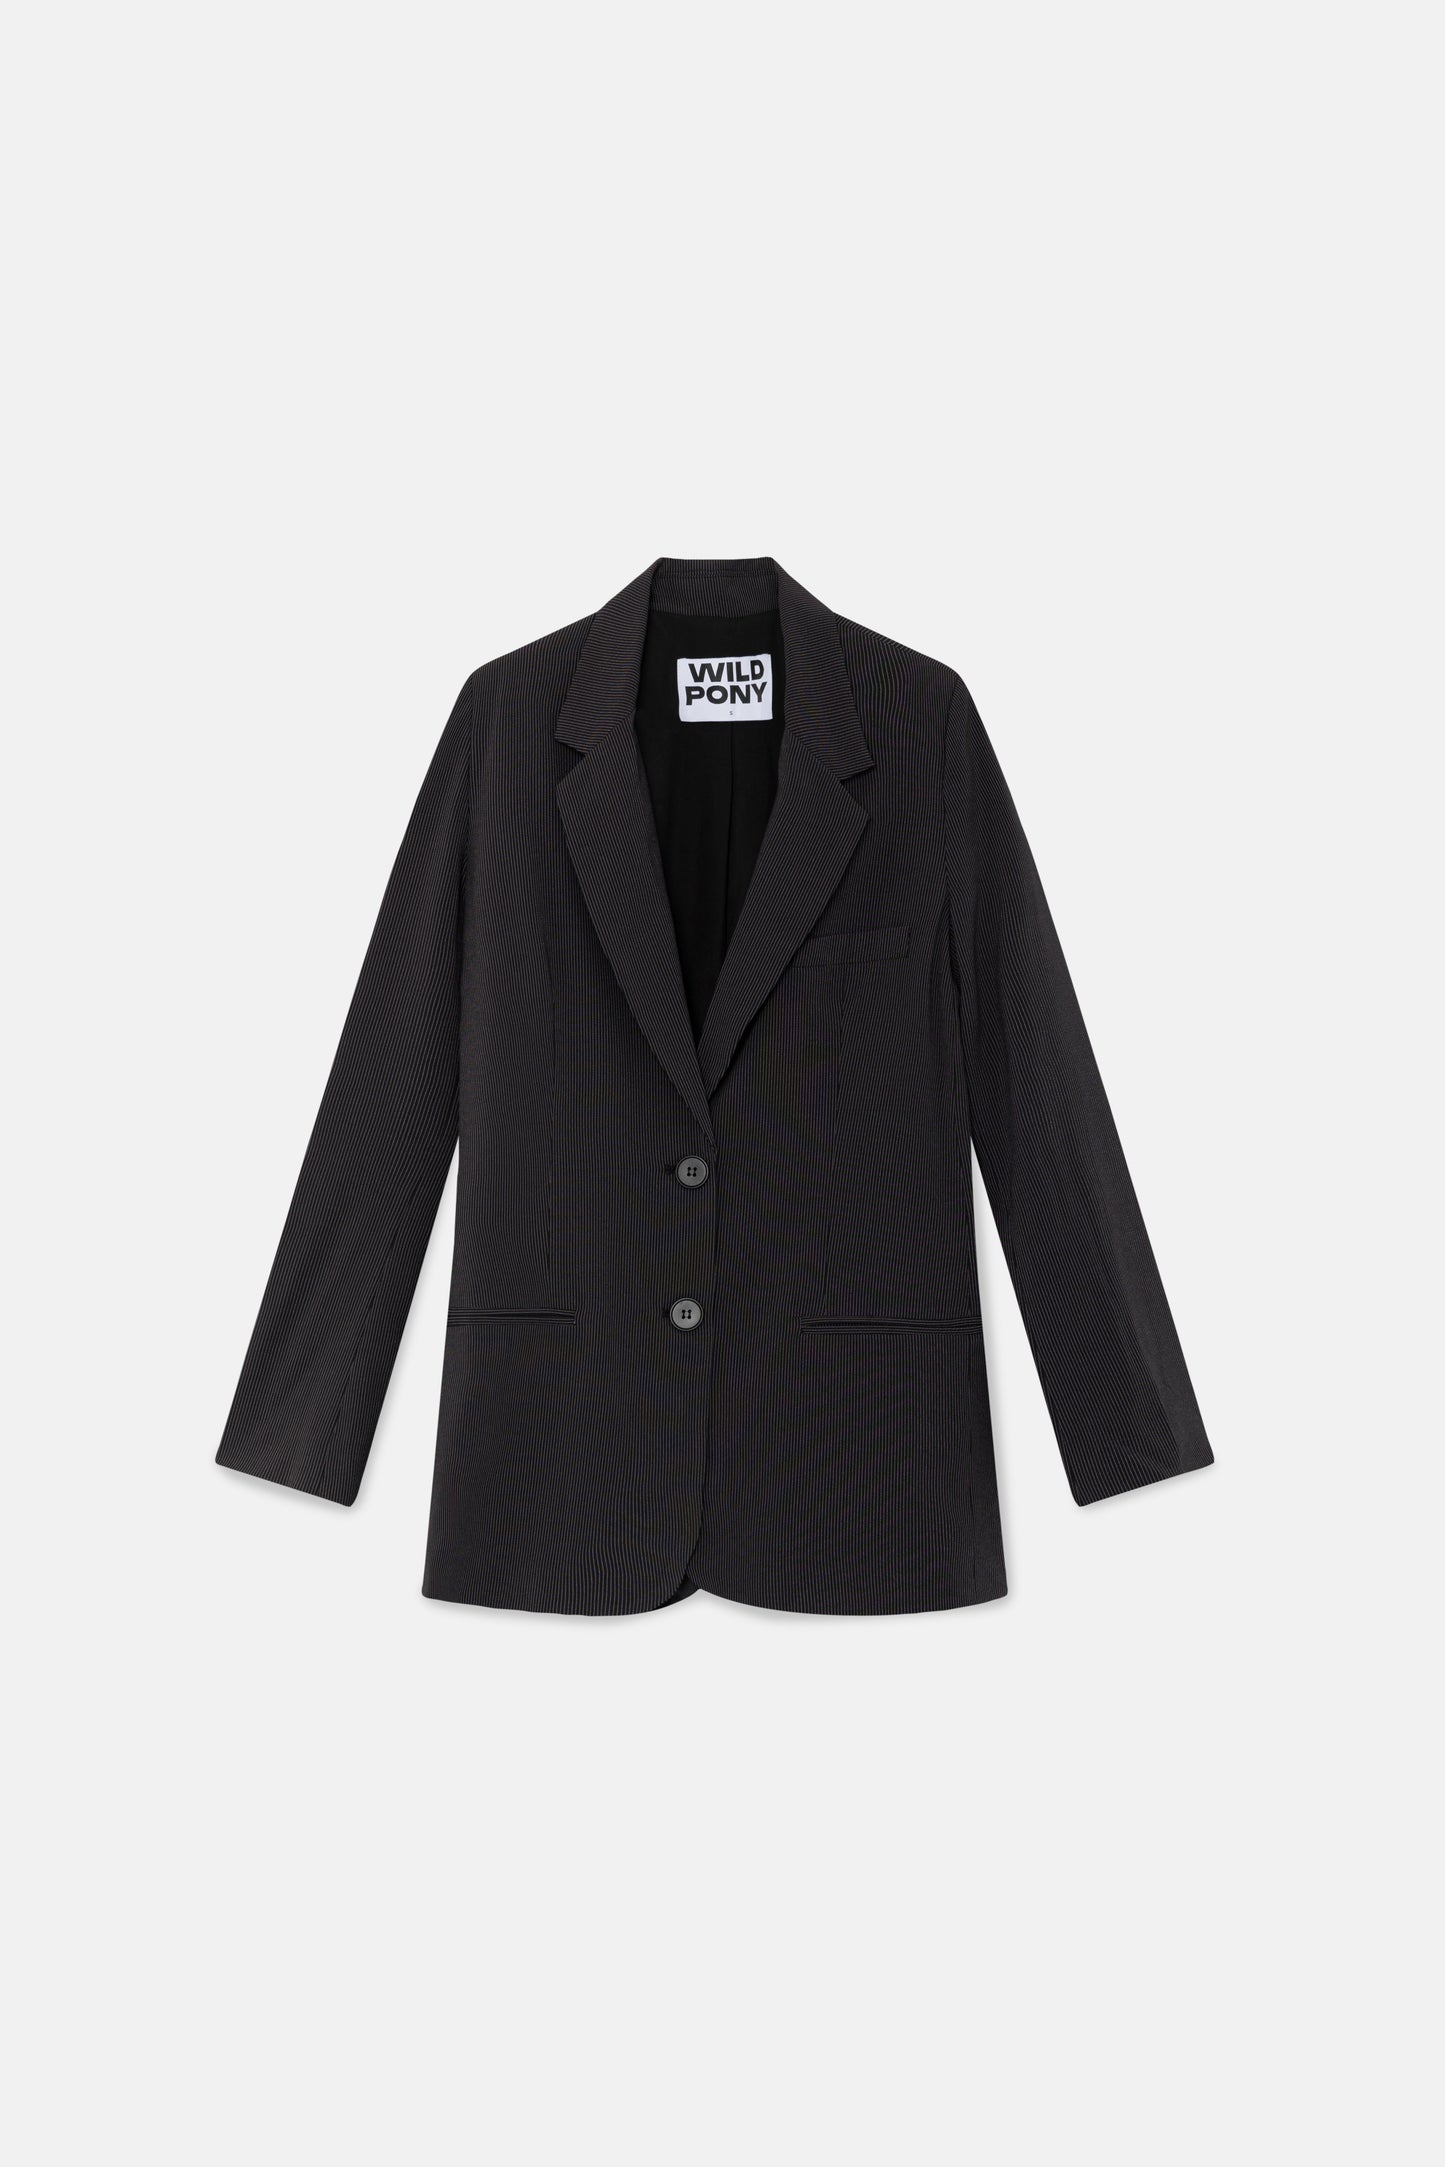 Black Pinstripe Suit Blazer